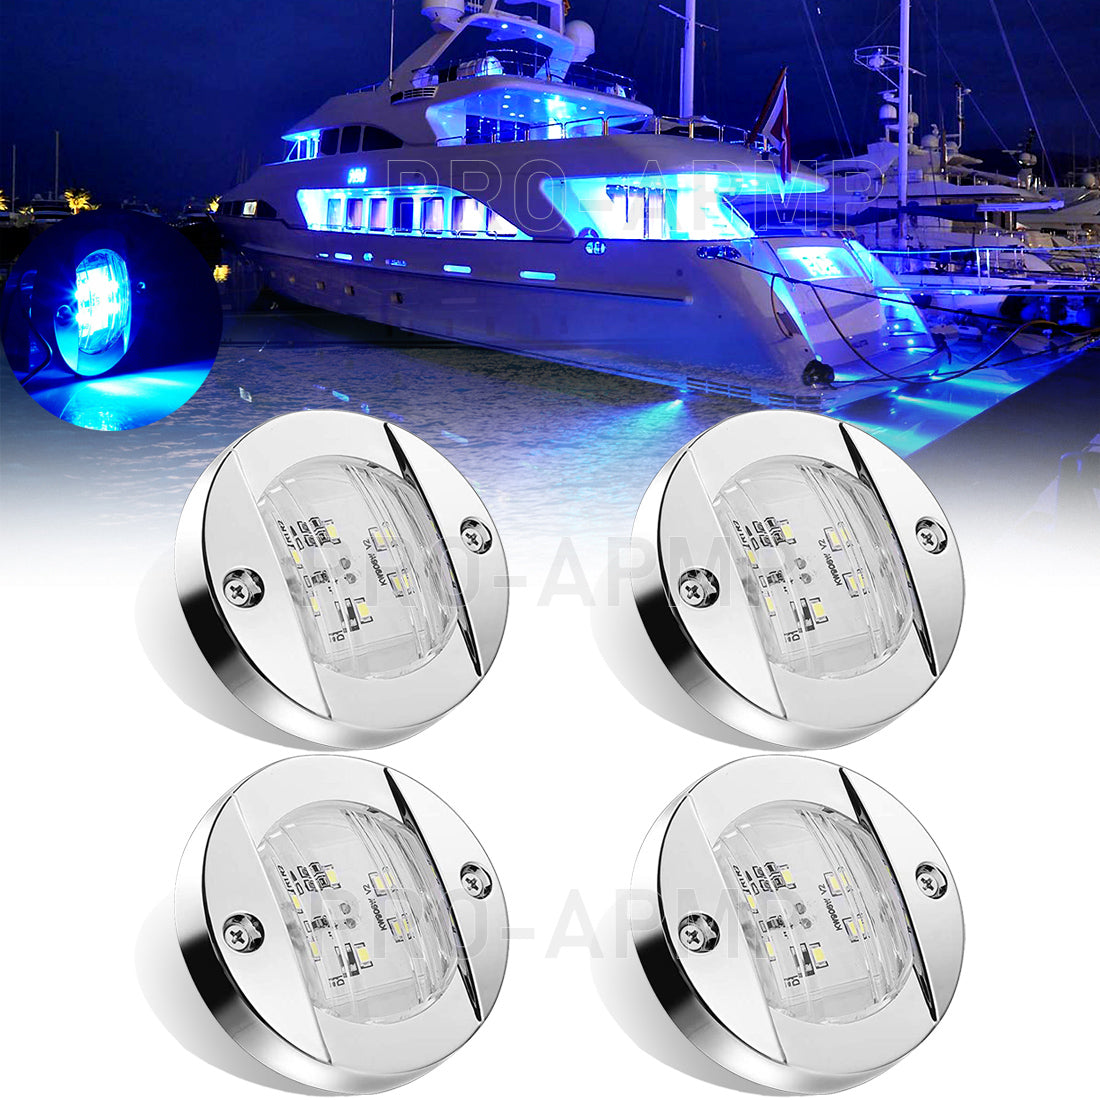  PSEQT 4Pcs 3'' Marine Boat Interior Lights Green LED